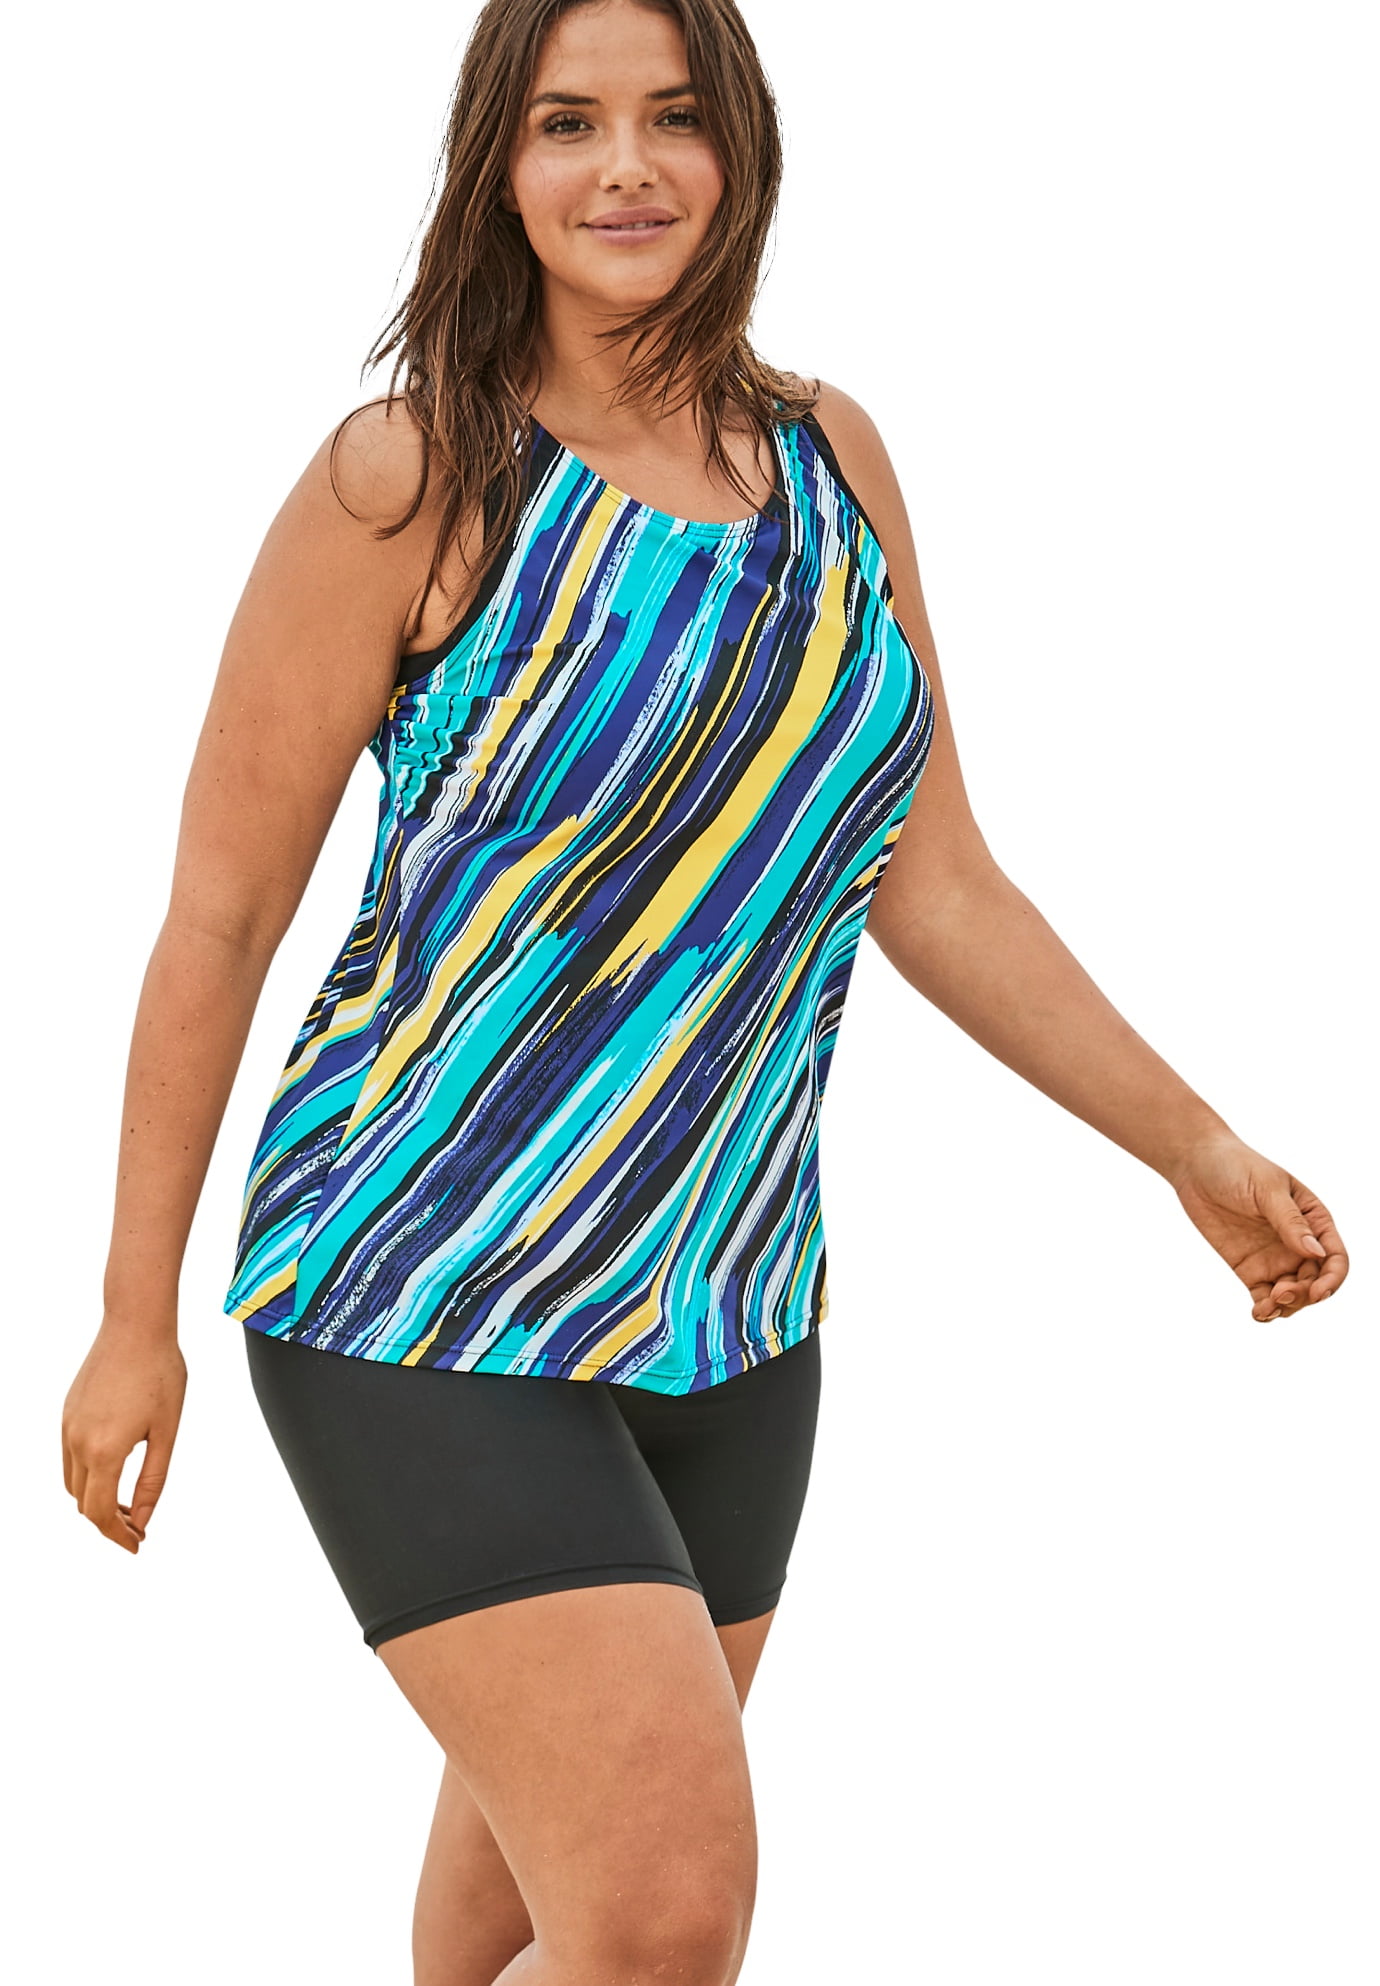 Swimsuits For All Plus Size Longer-Length Tankini Top 24 Stripe - Walmart.com